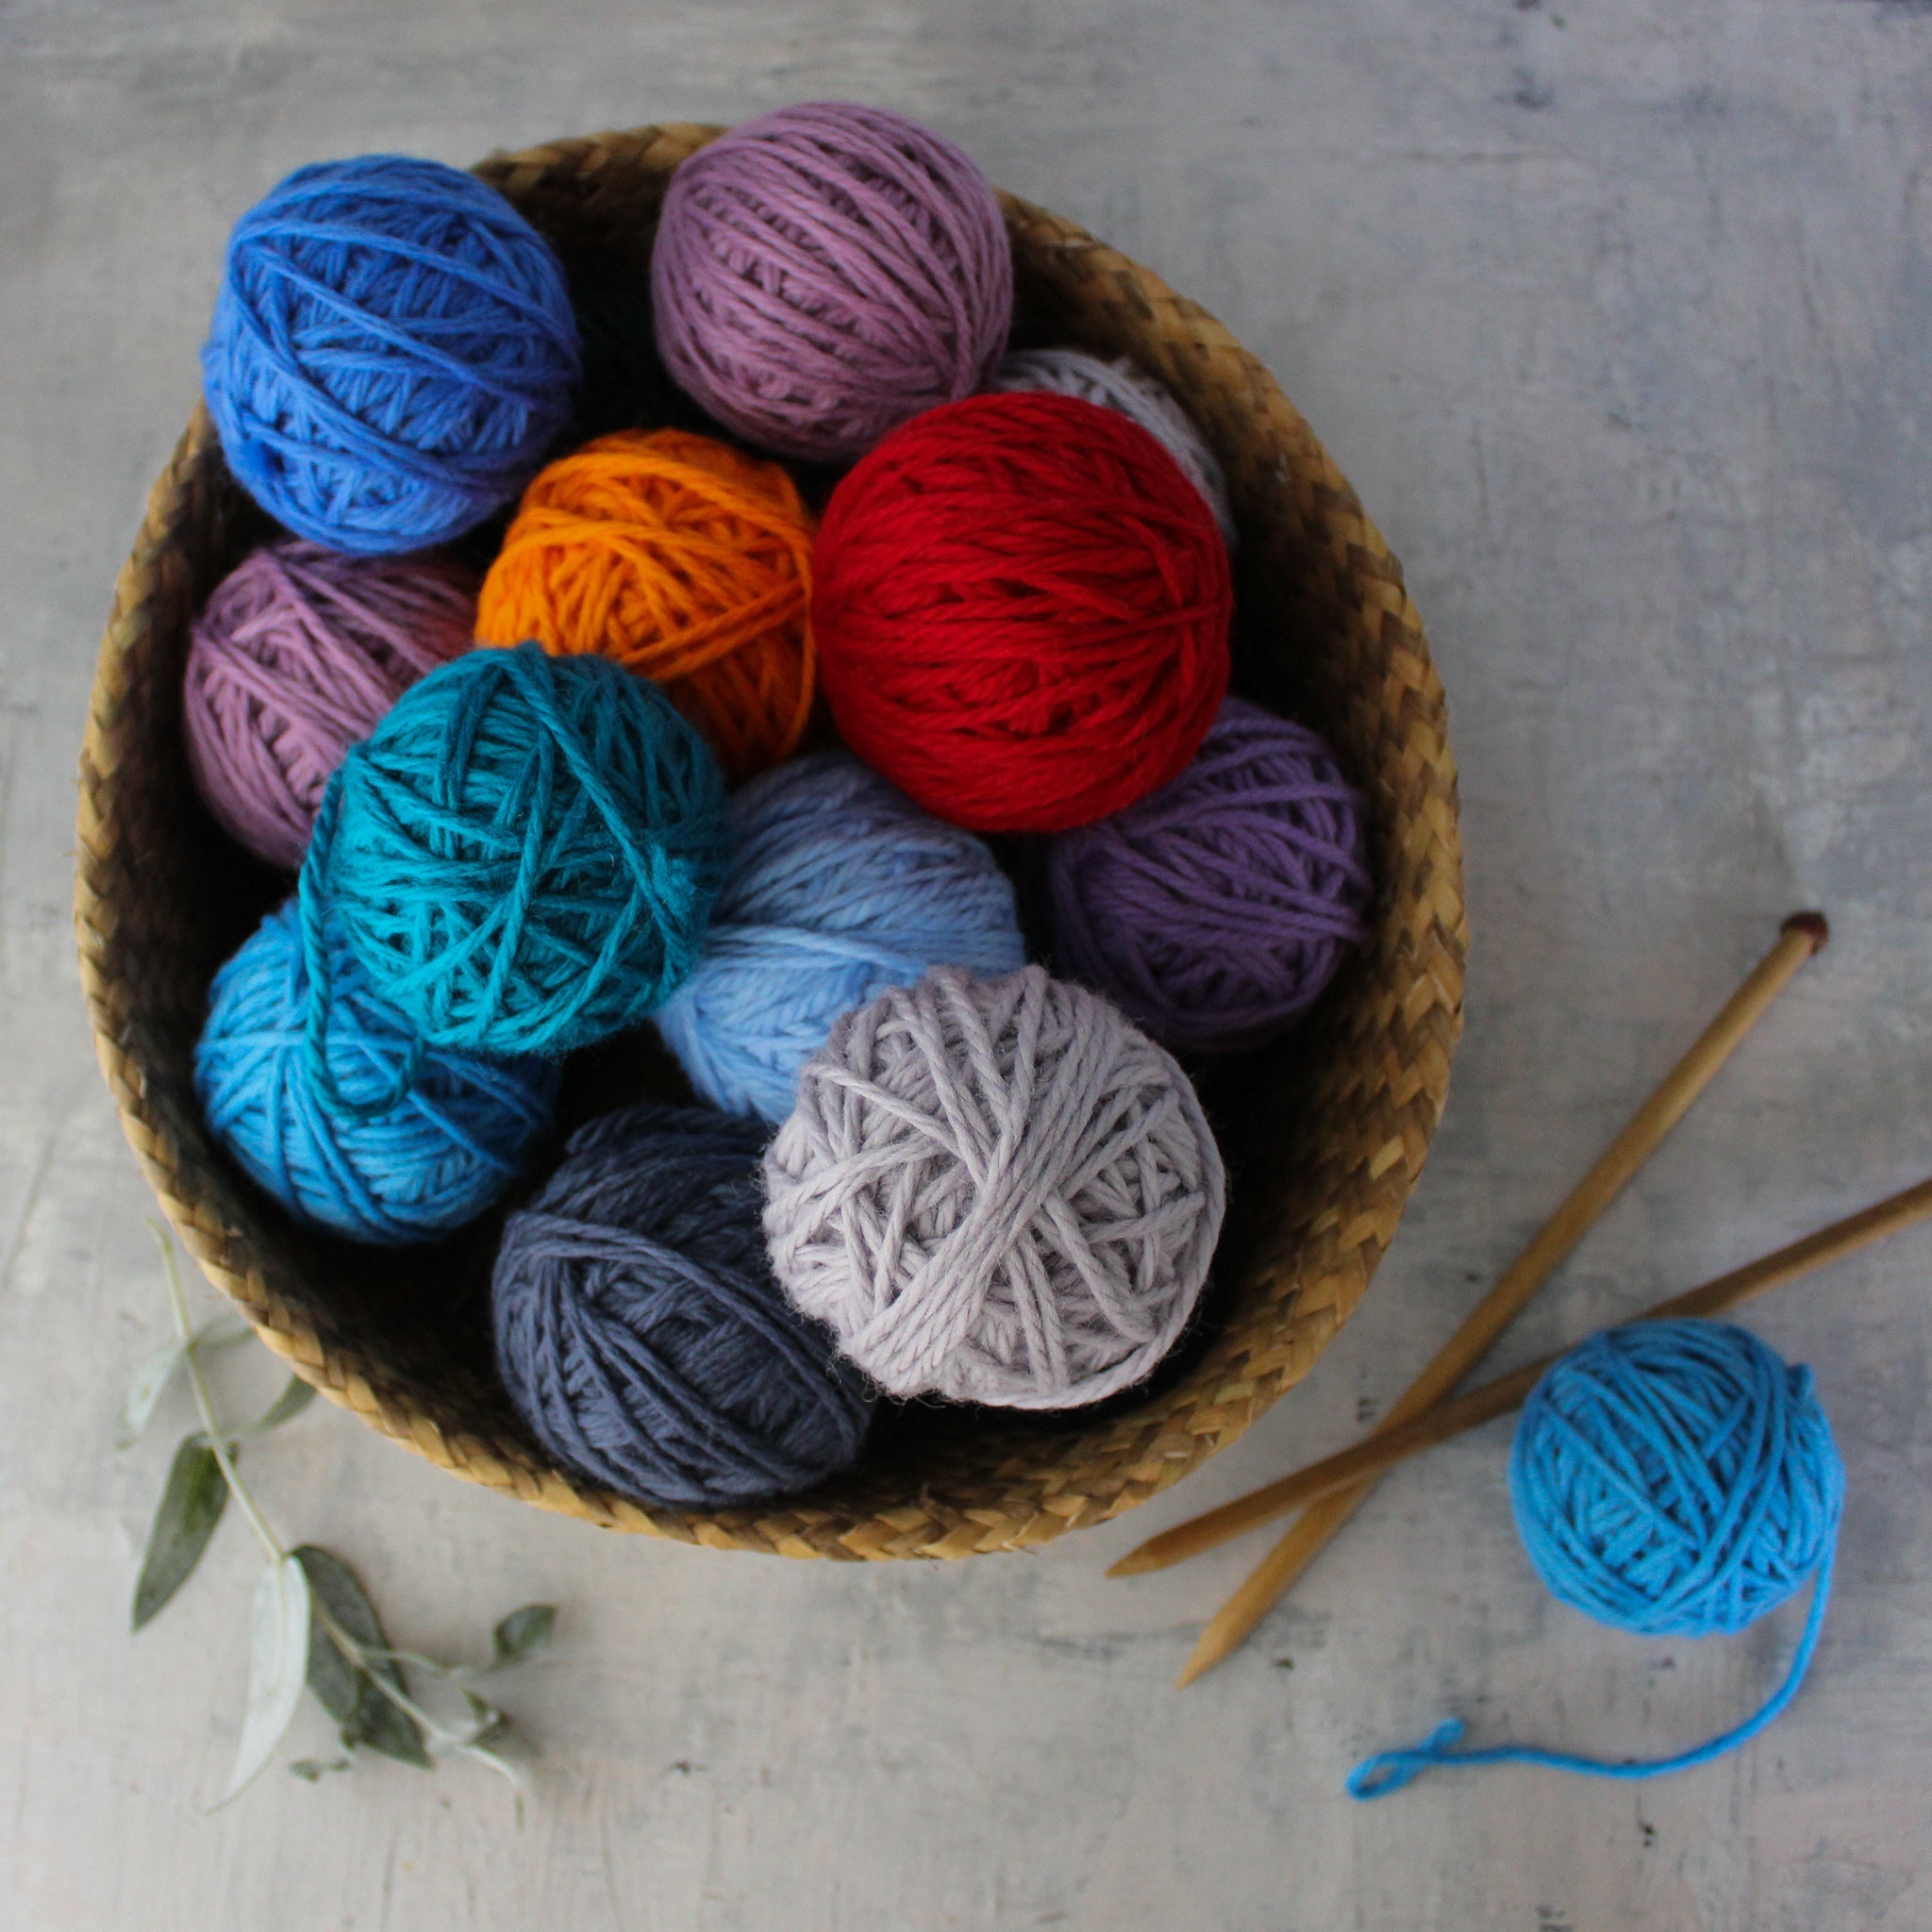 Craft Wool Single Balls - Tribe Castlemaine